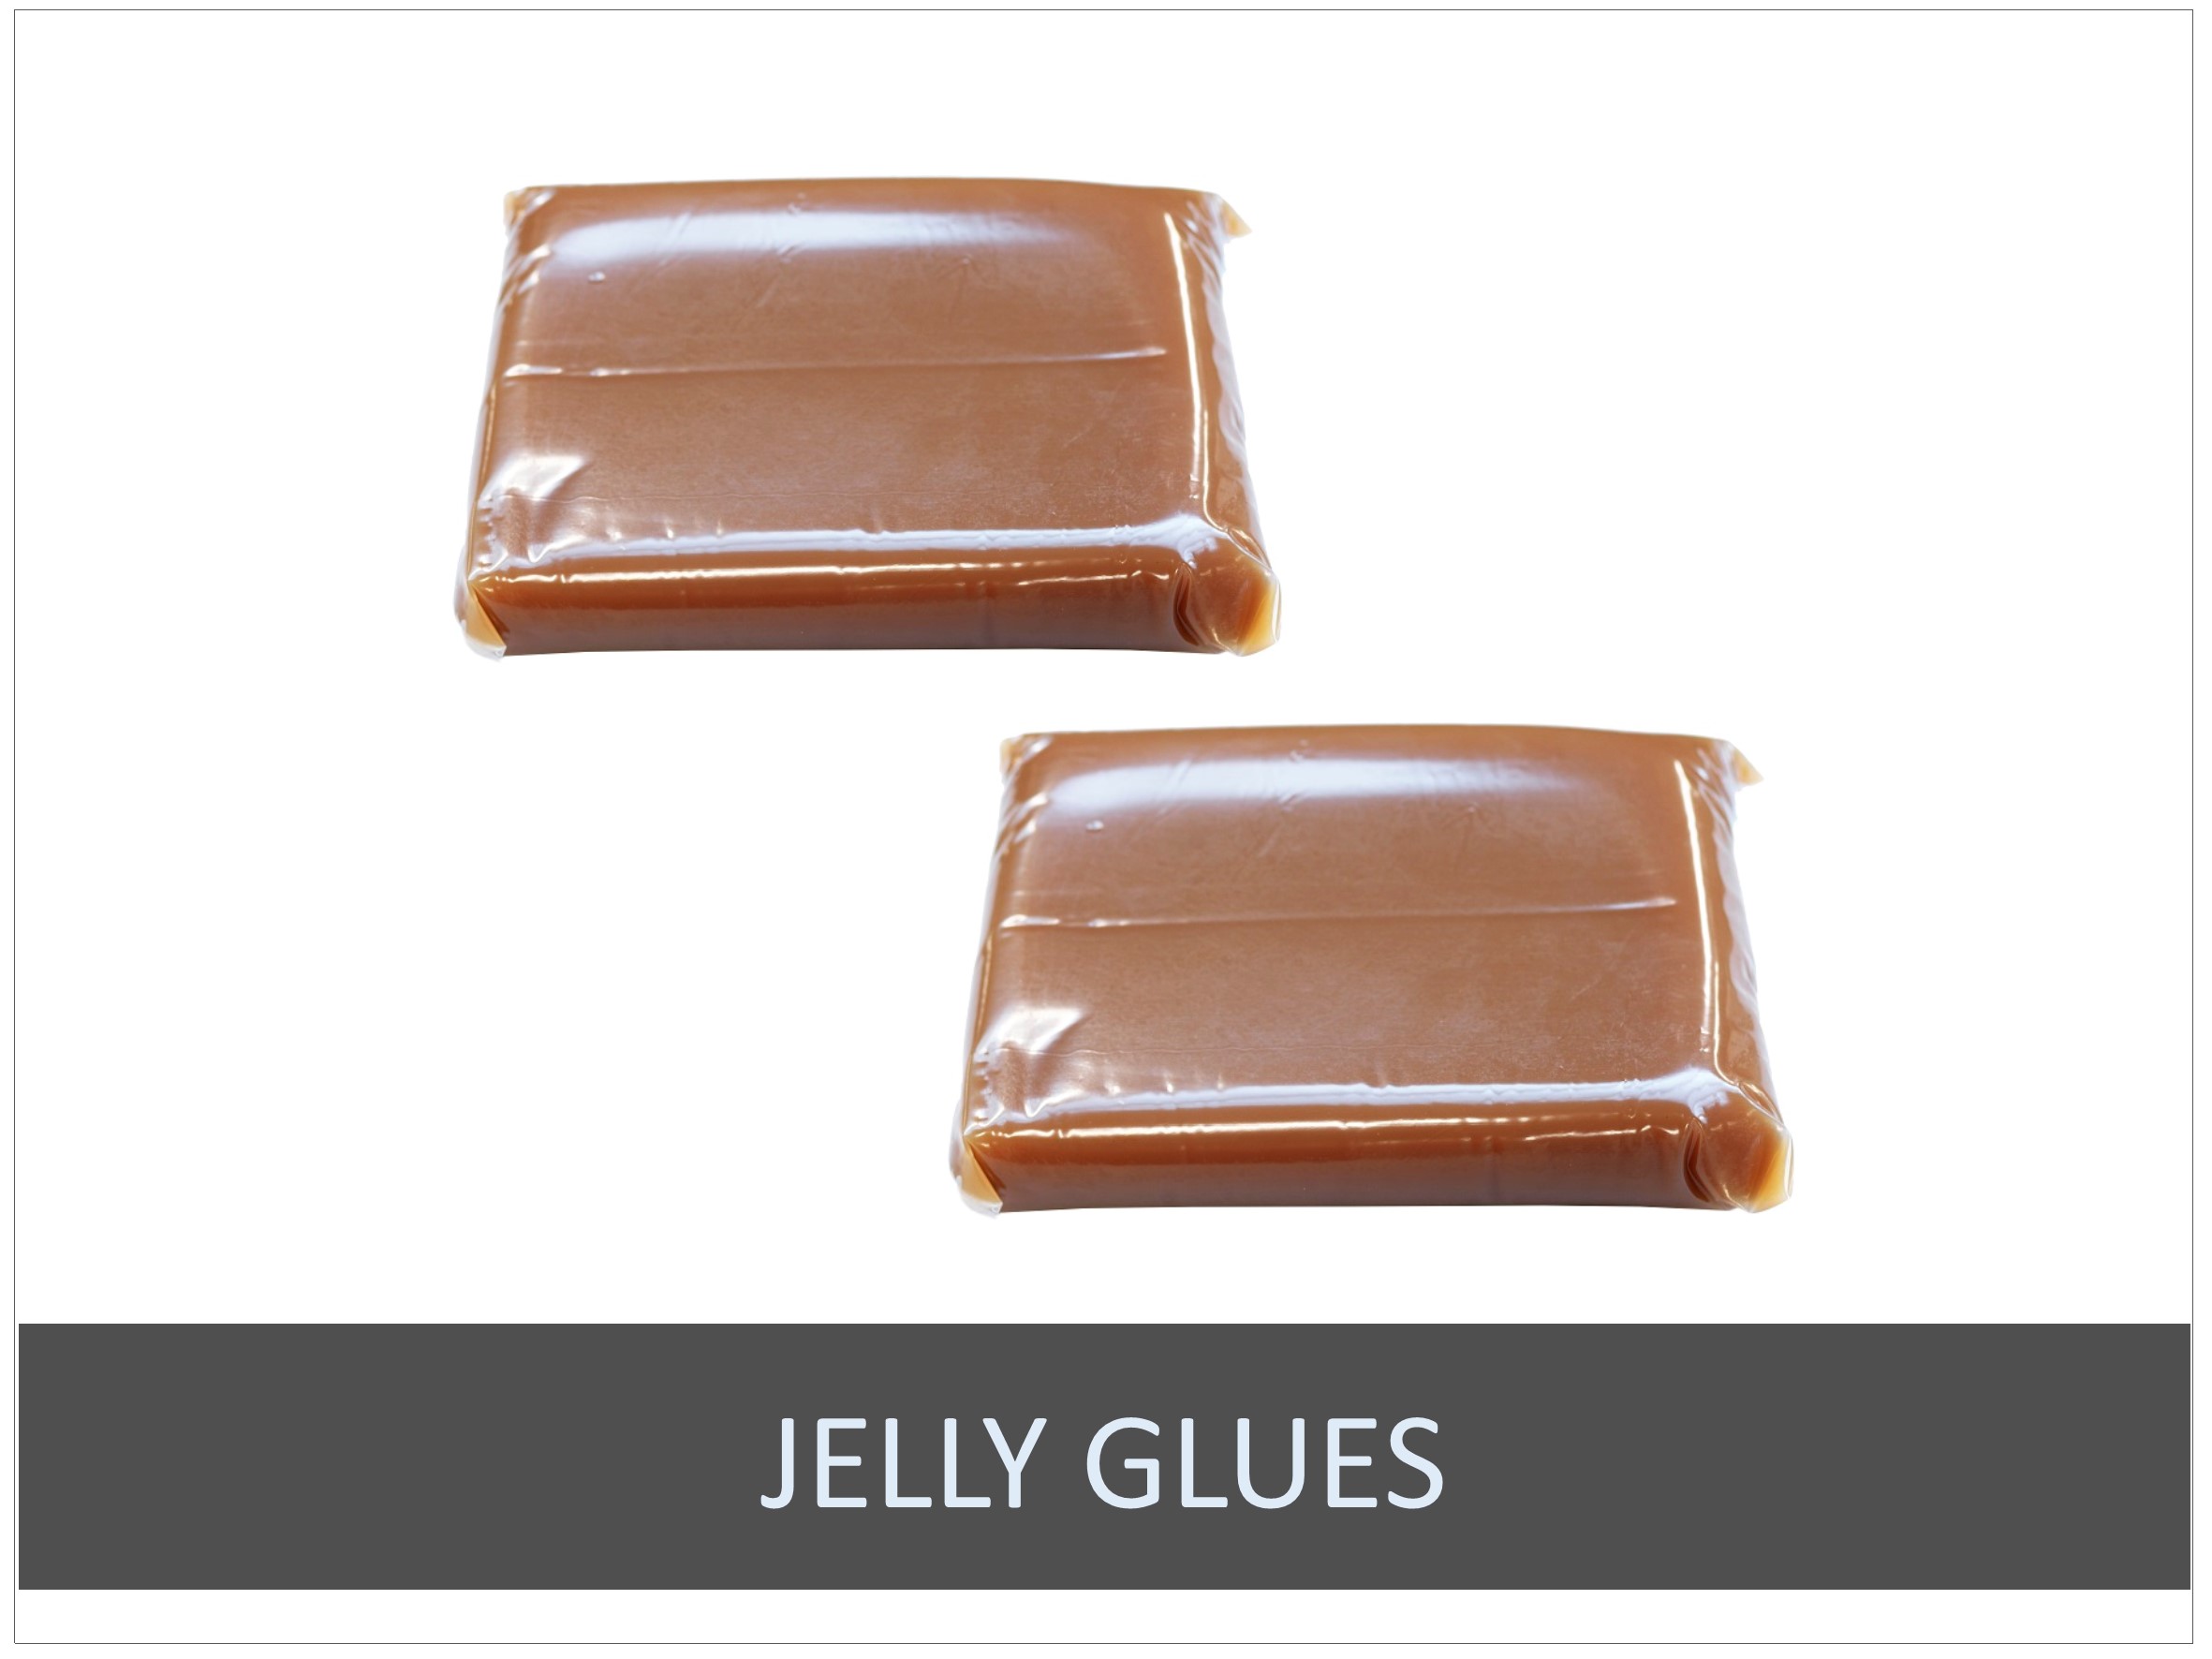 Jelly glue